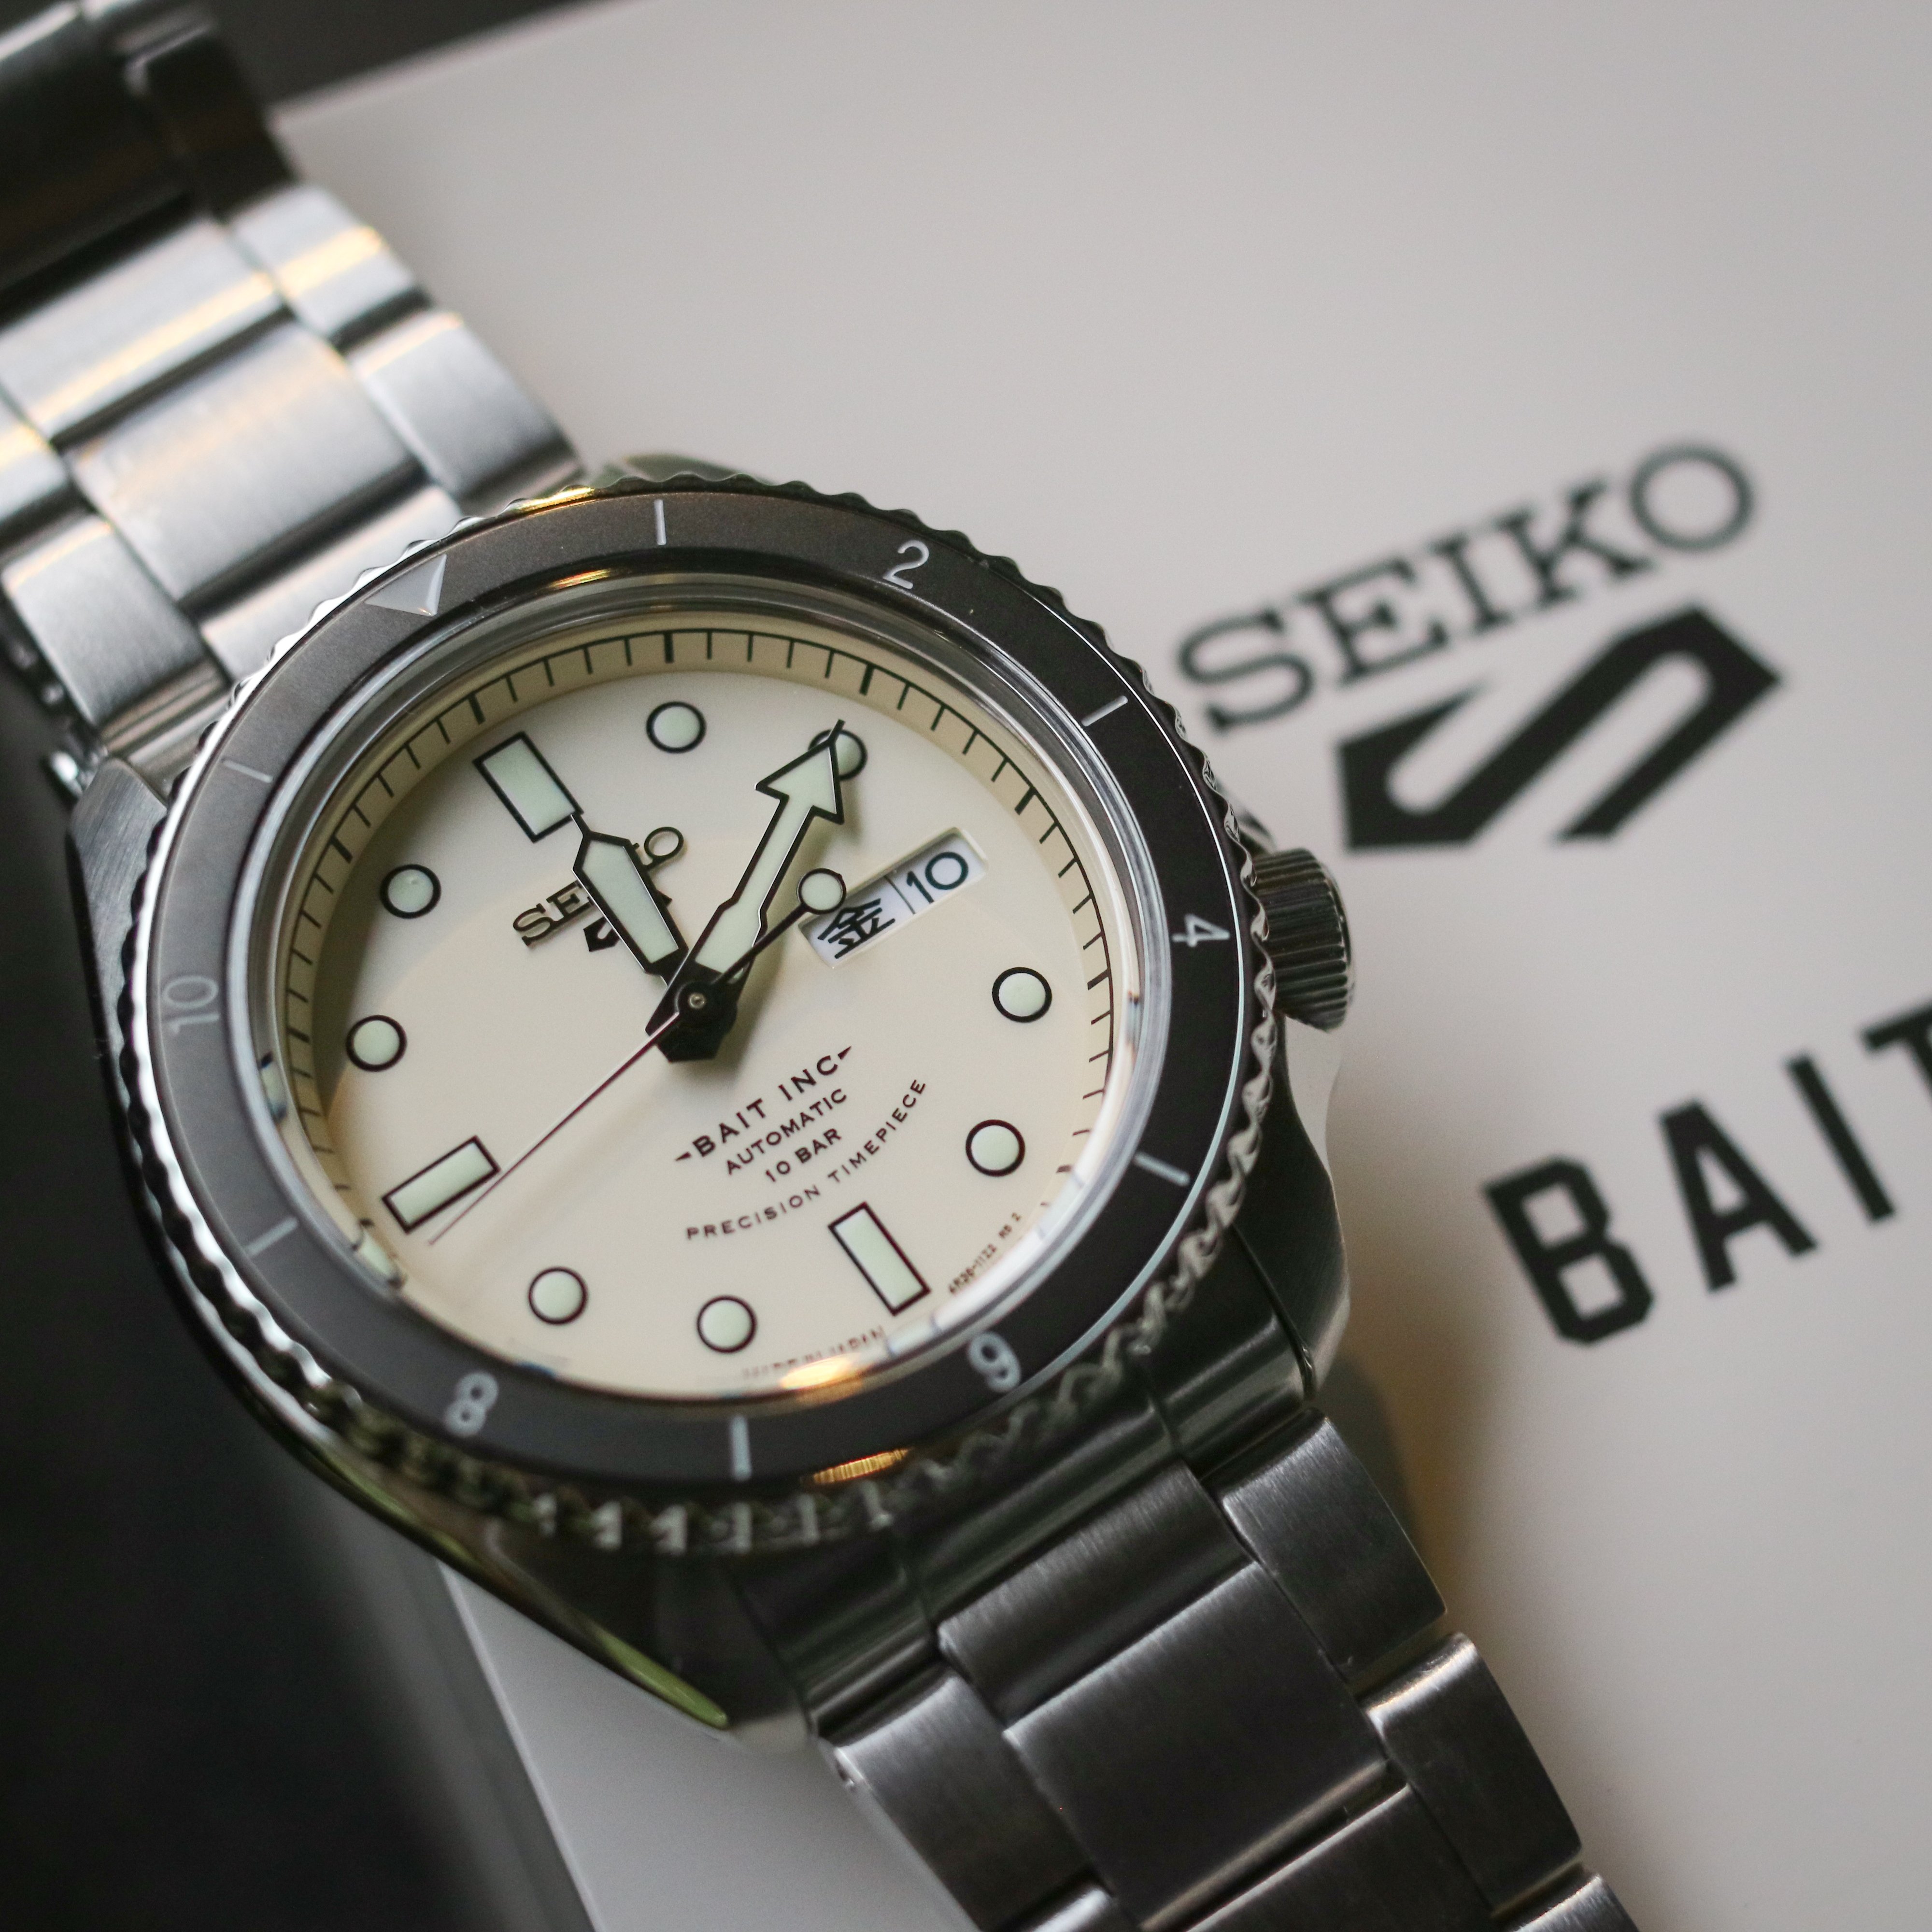 FS : Seiko x BAIT SBSA145 limited edition - $525 shipped US 